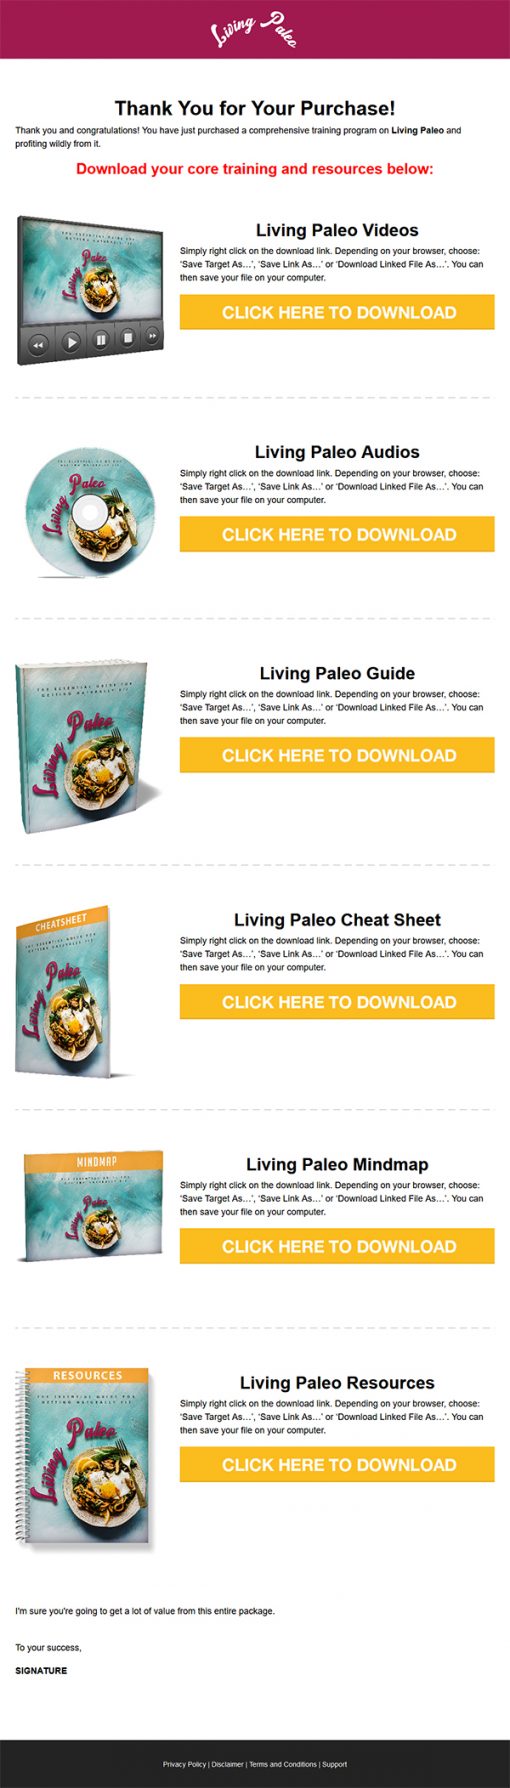 Living Paleo Diet Ebook and Videos MRR